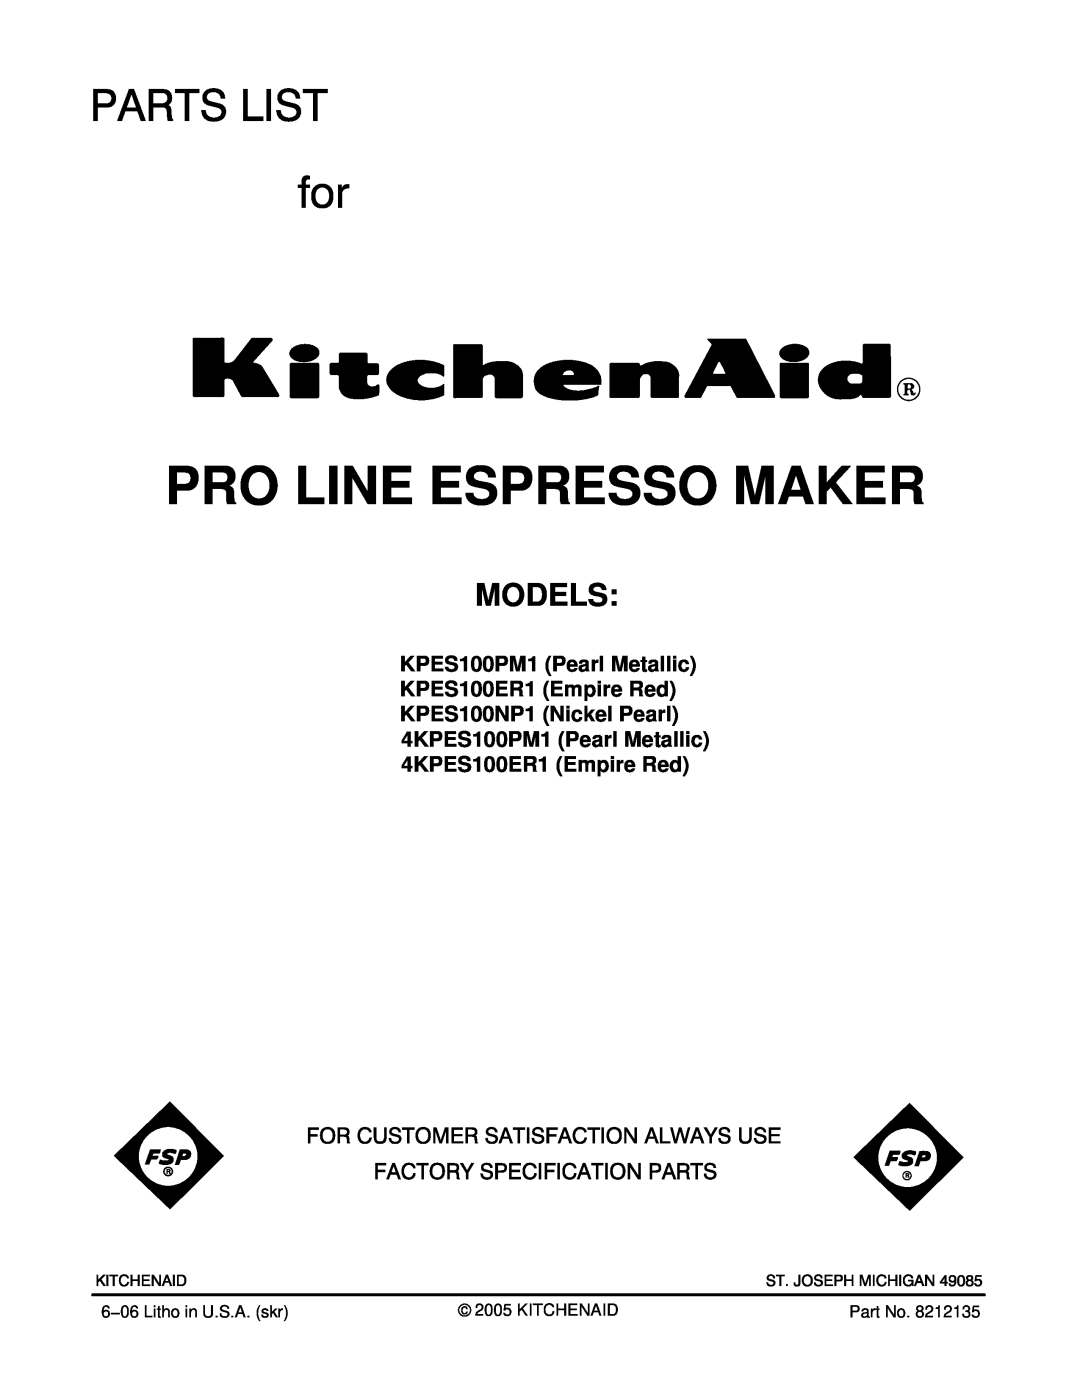 Maytag manual Models, KPES100PM1 Pearl Metallic KPES100ER1 Empire Red, KPES100NP1 Nickel Pearl, Pro Line Espresso Maker 